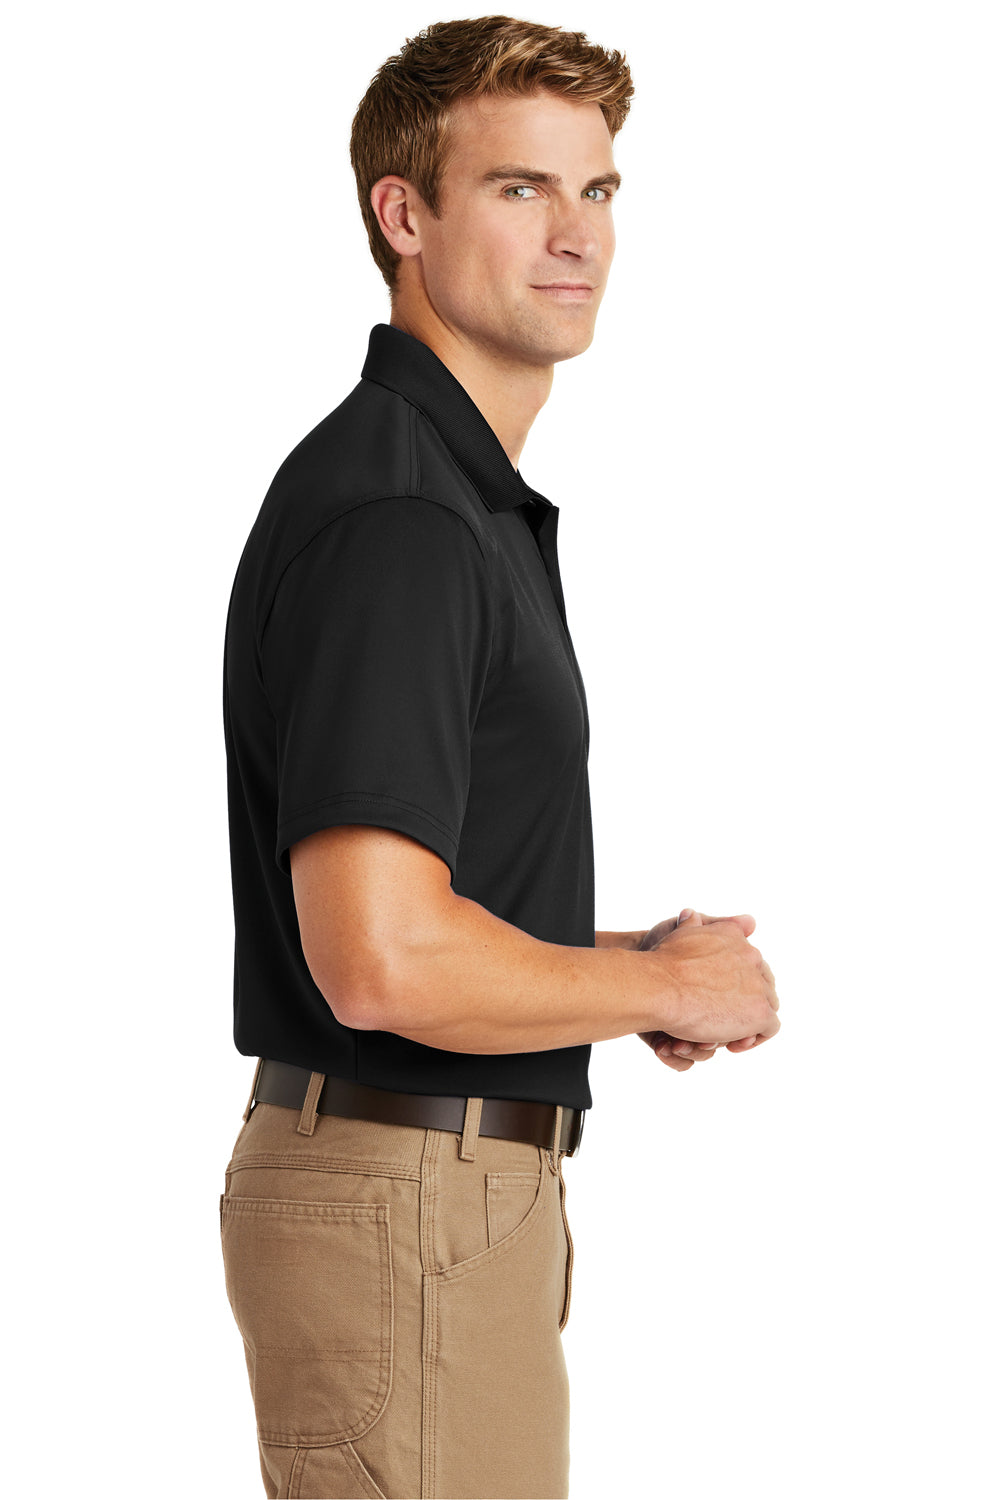 CornerStone CS412 Mens Select Moisture Wicking Short Sleeve Polo Shirt Black Side